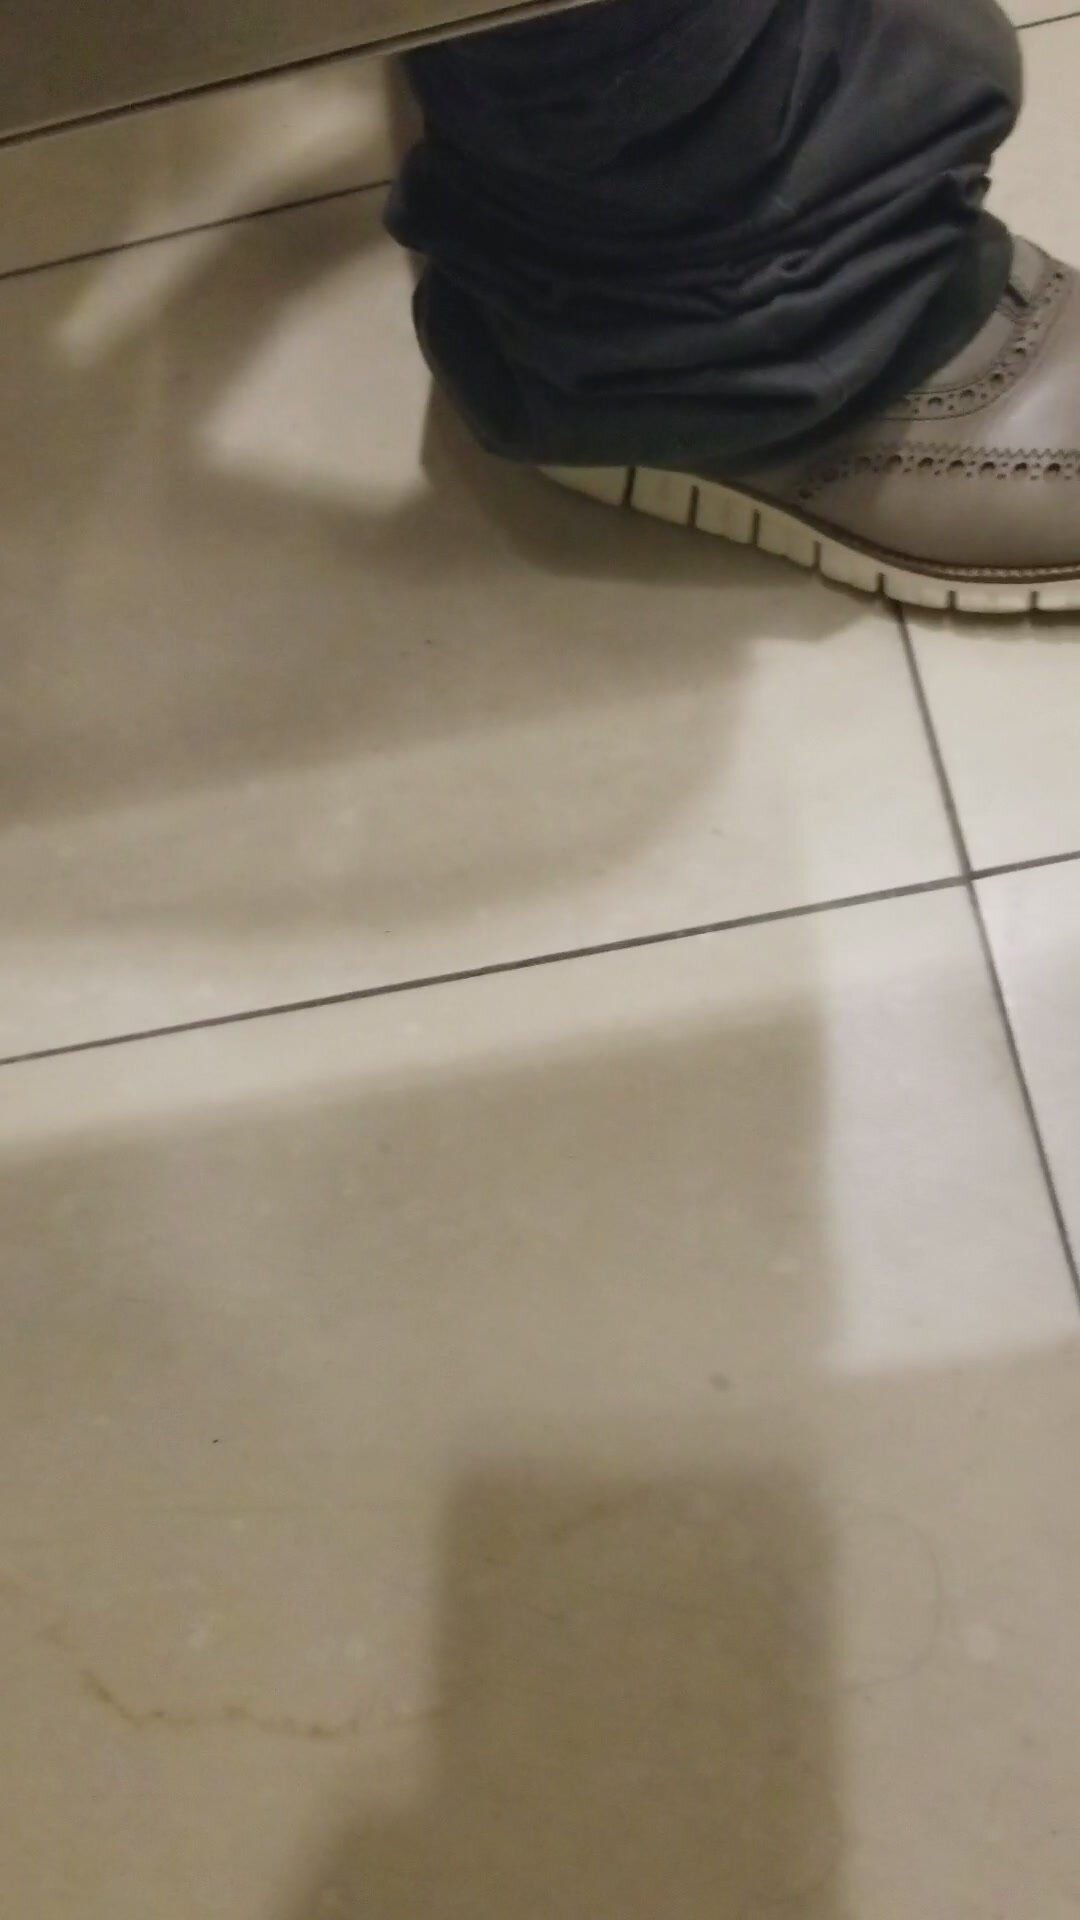 Shadowing Jacking in airport restroom